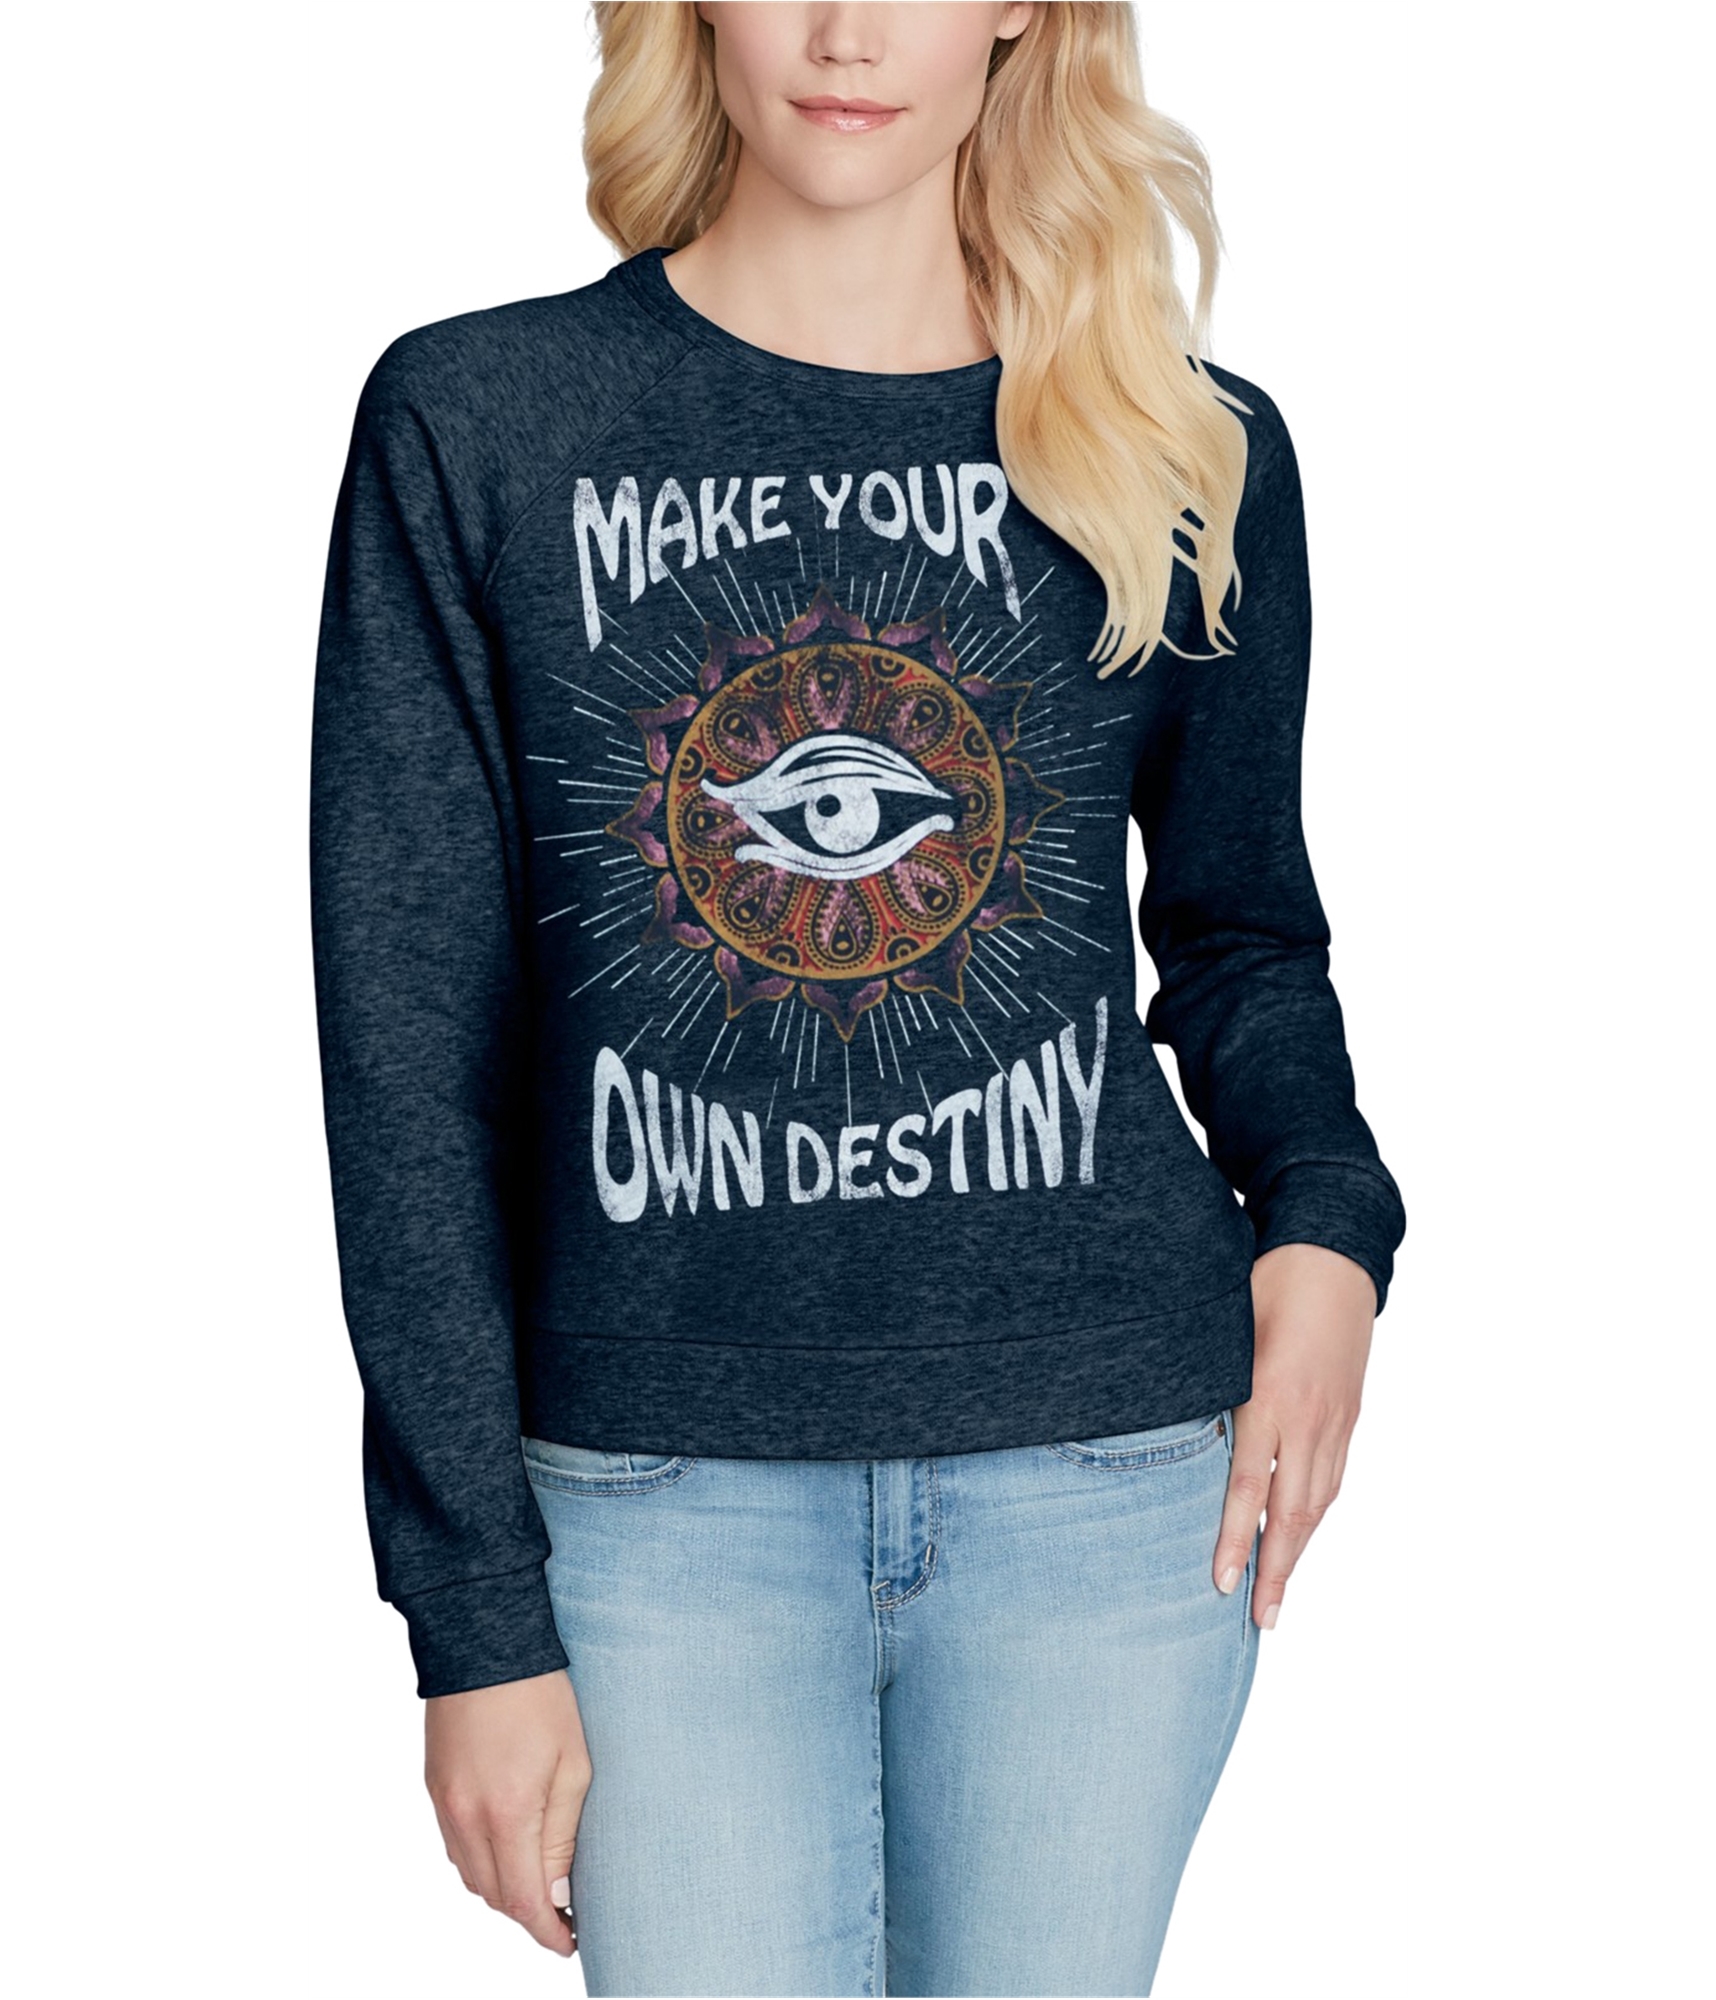 Buy a Jessica Simpson Womens Make Your Own Destiny Sweatshirt